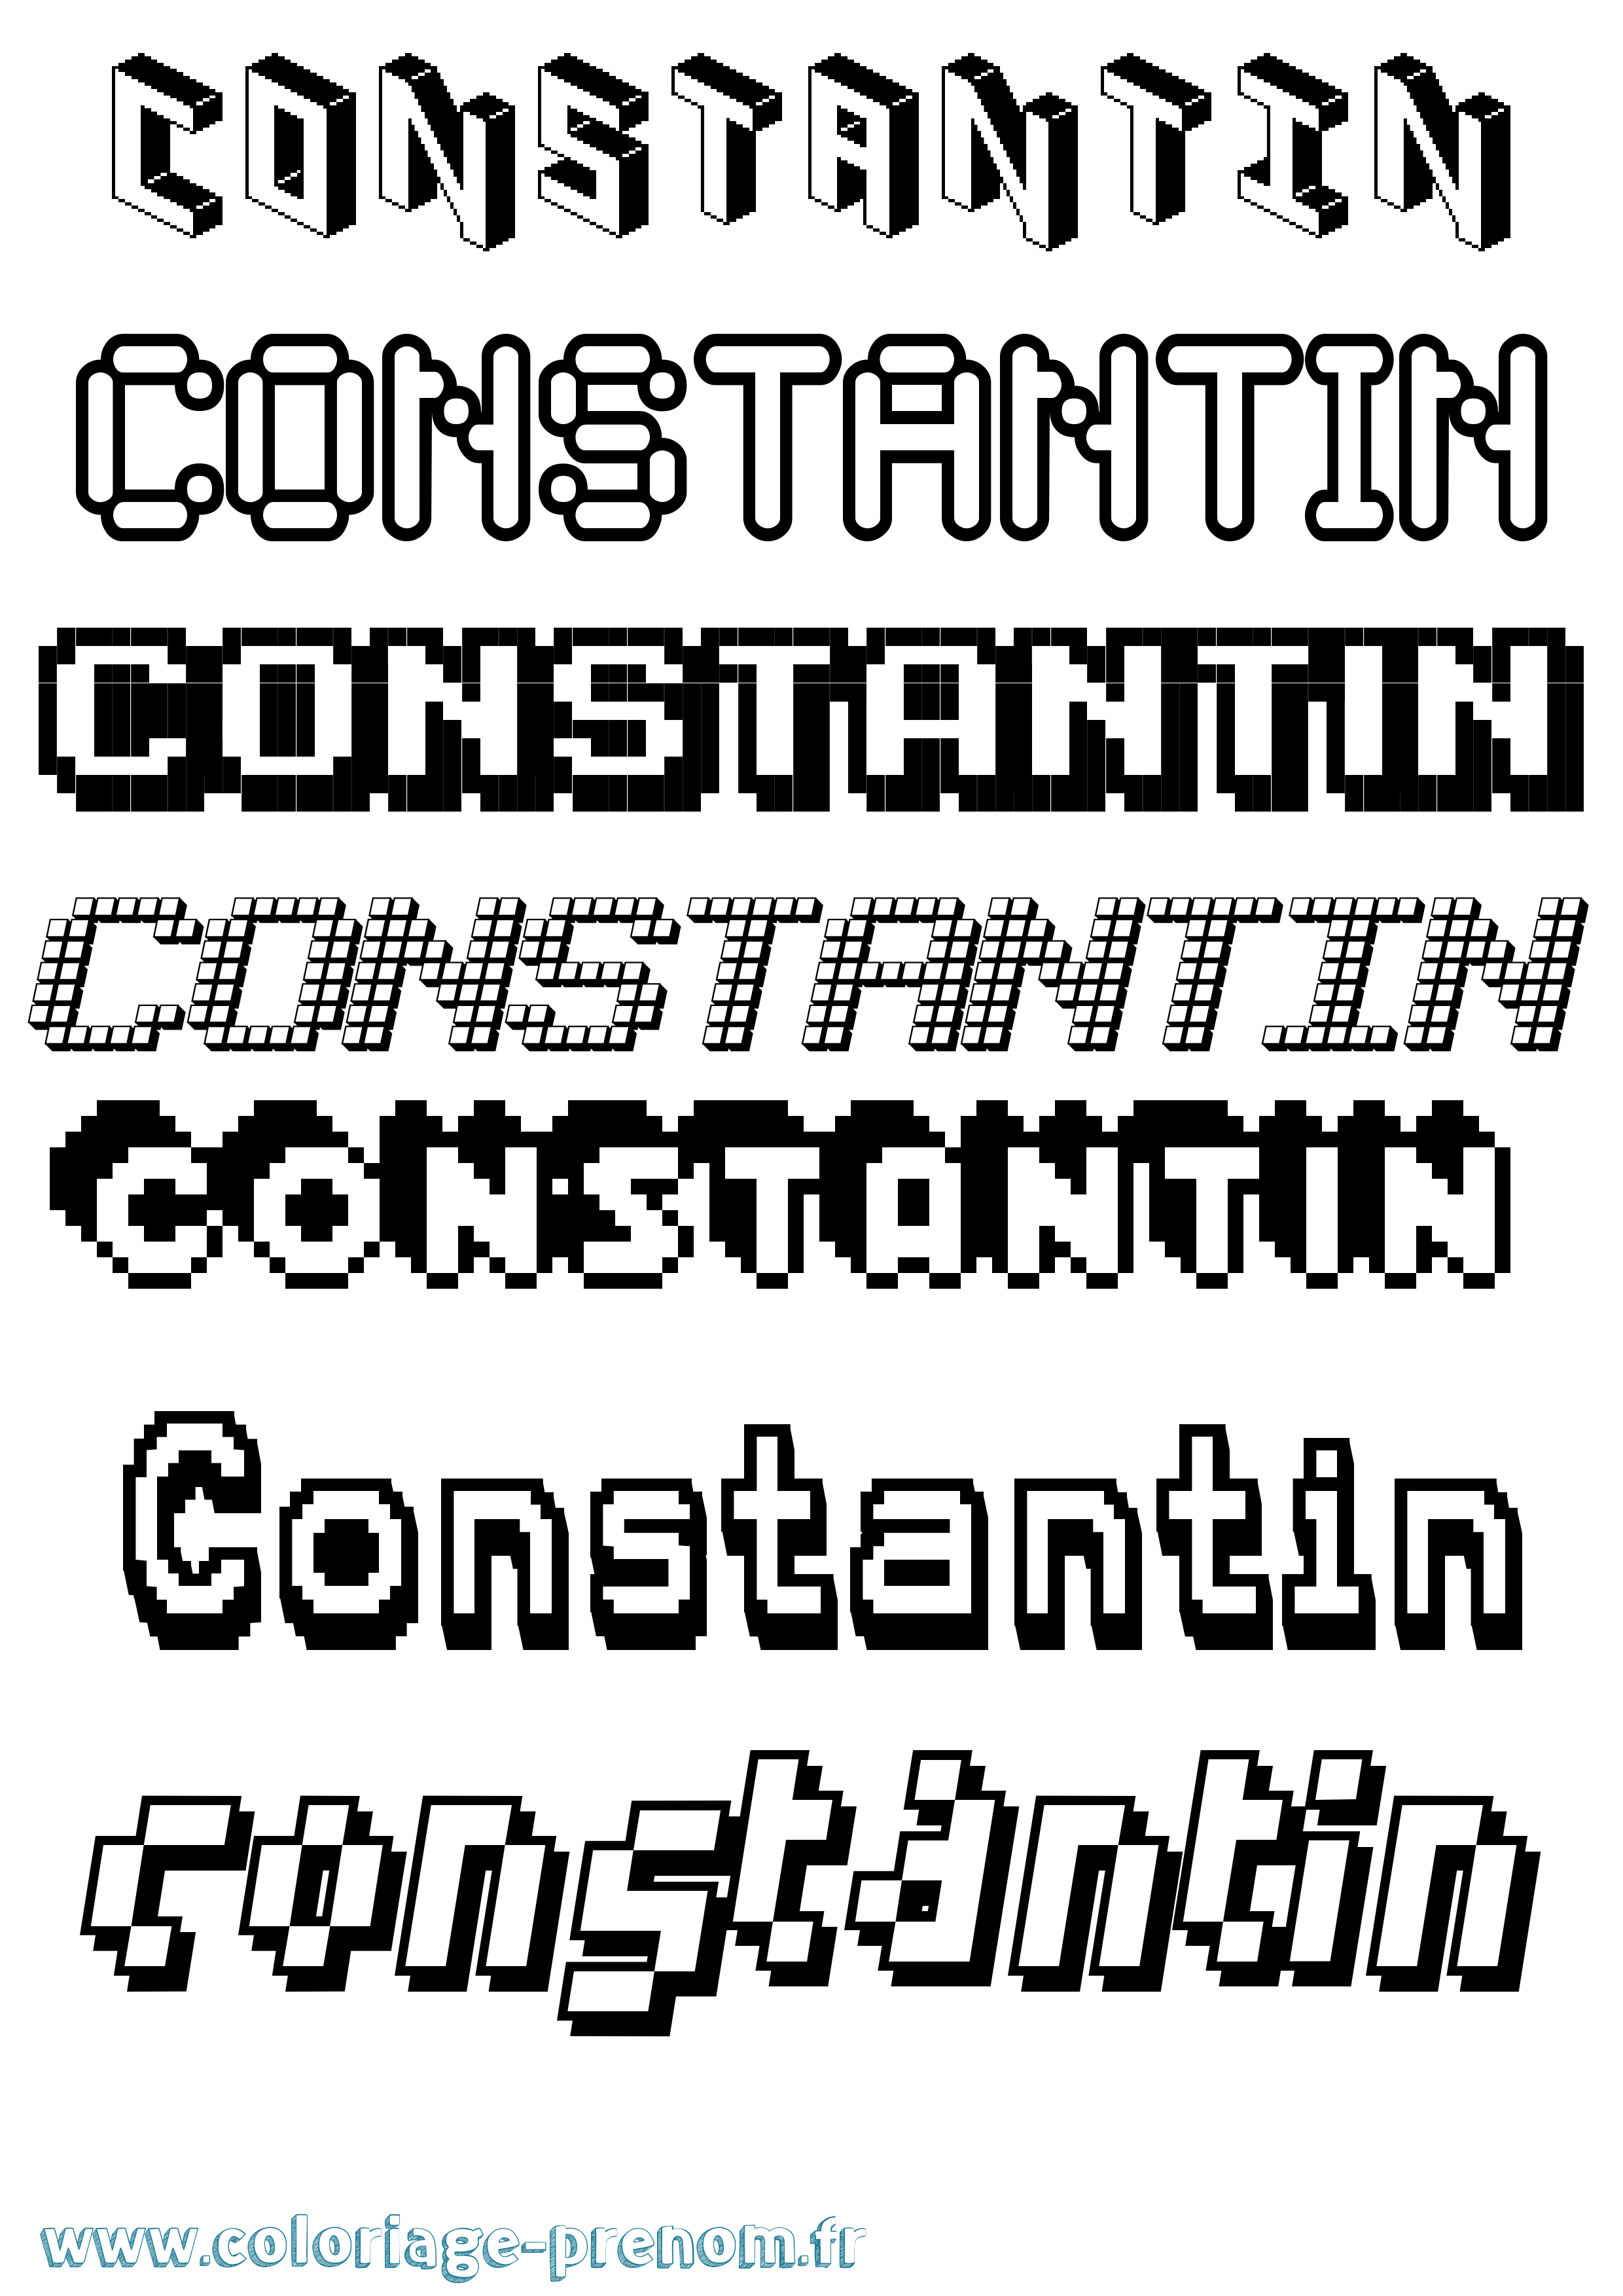 Coloriage prénom Constantin